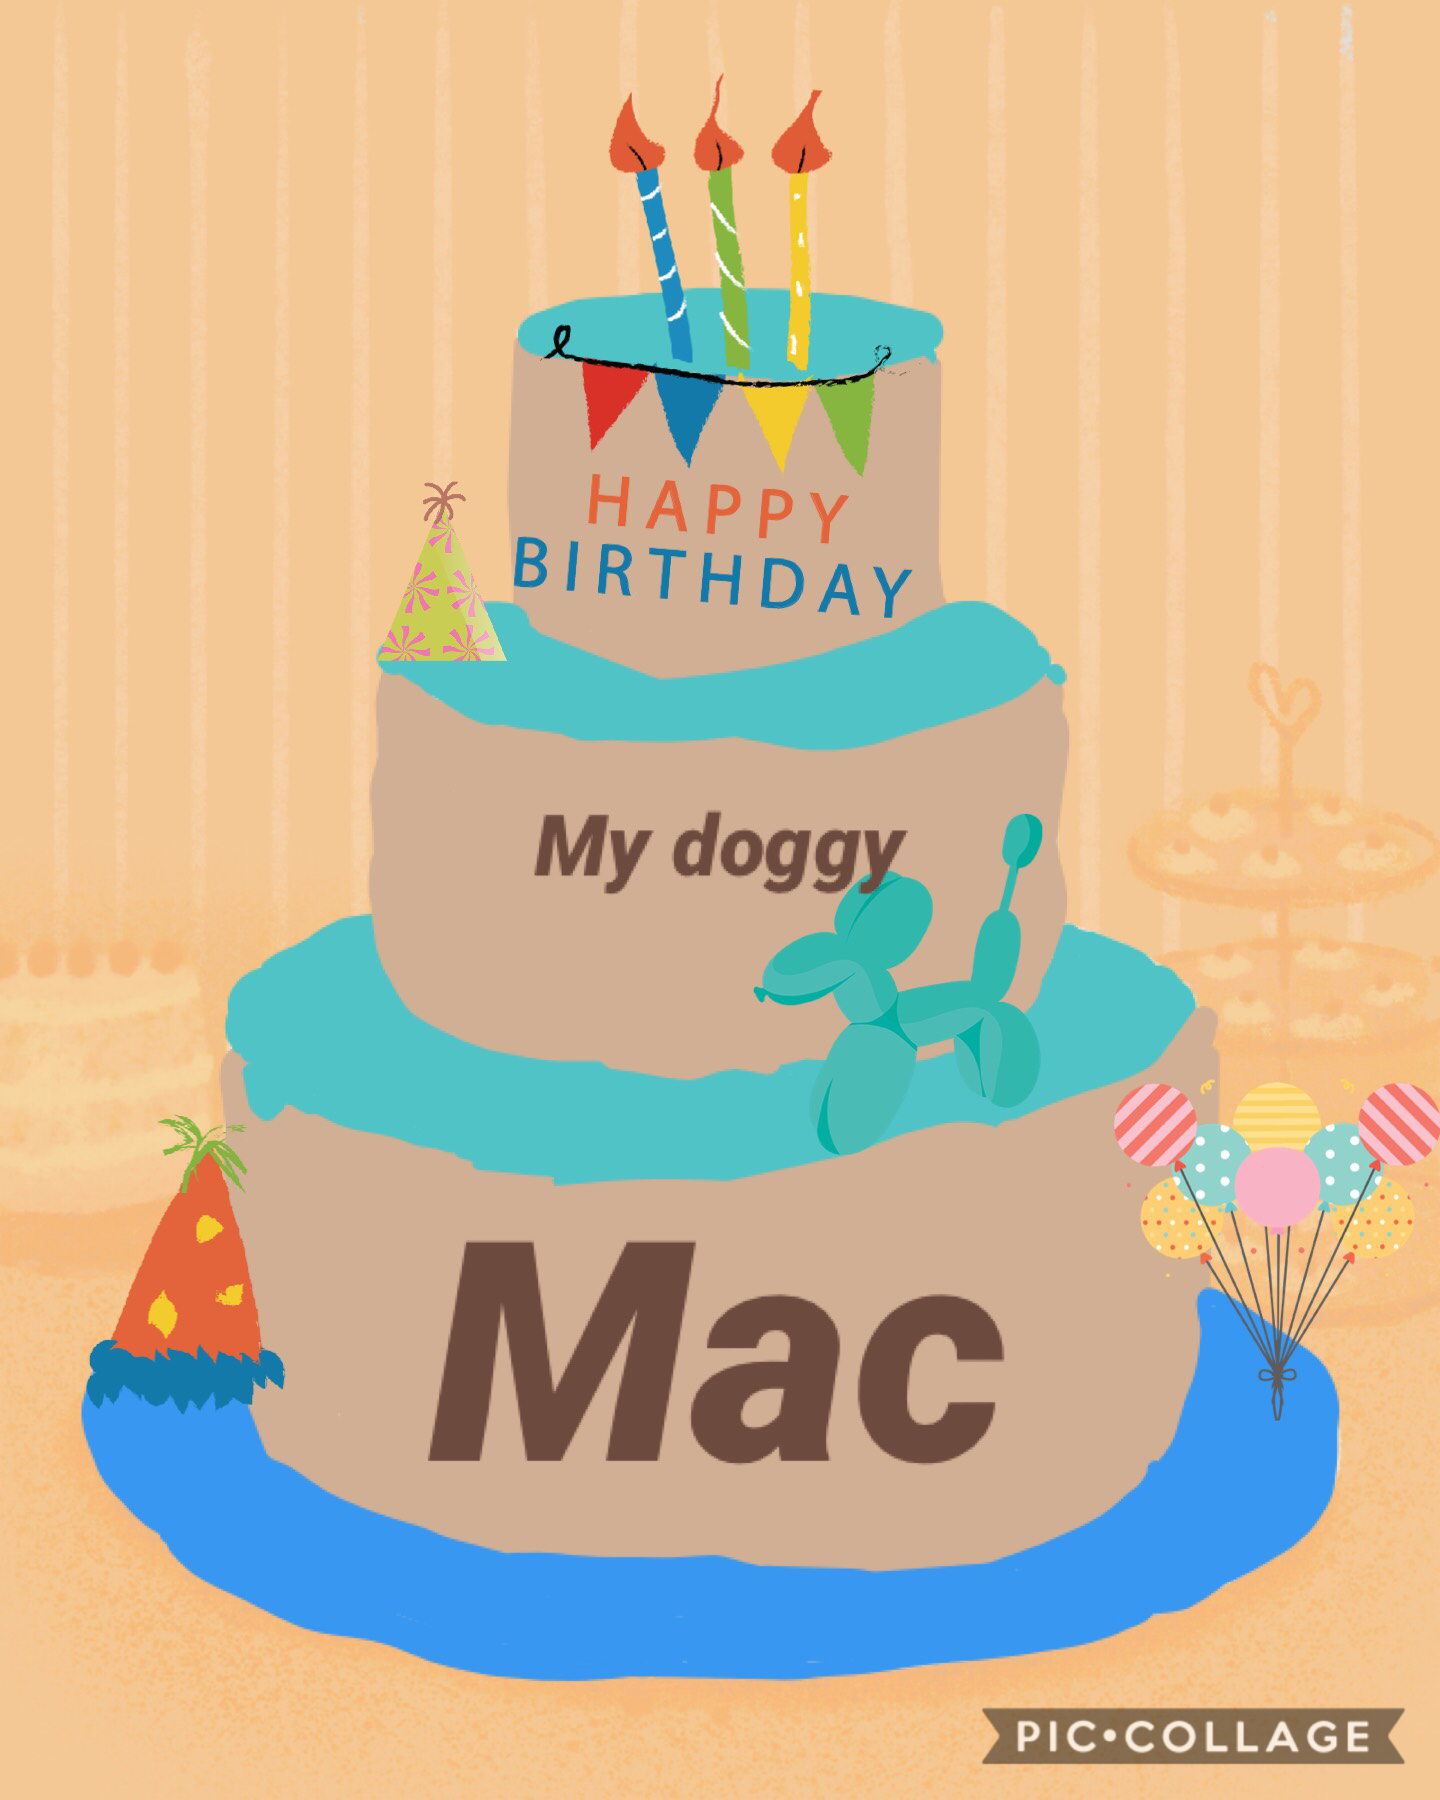 Almost my dog macs bday